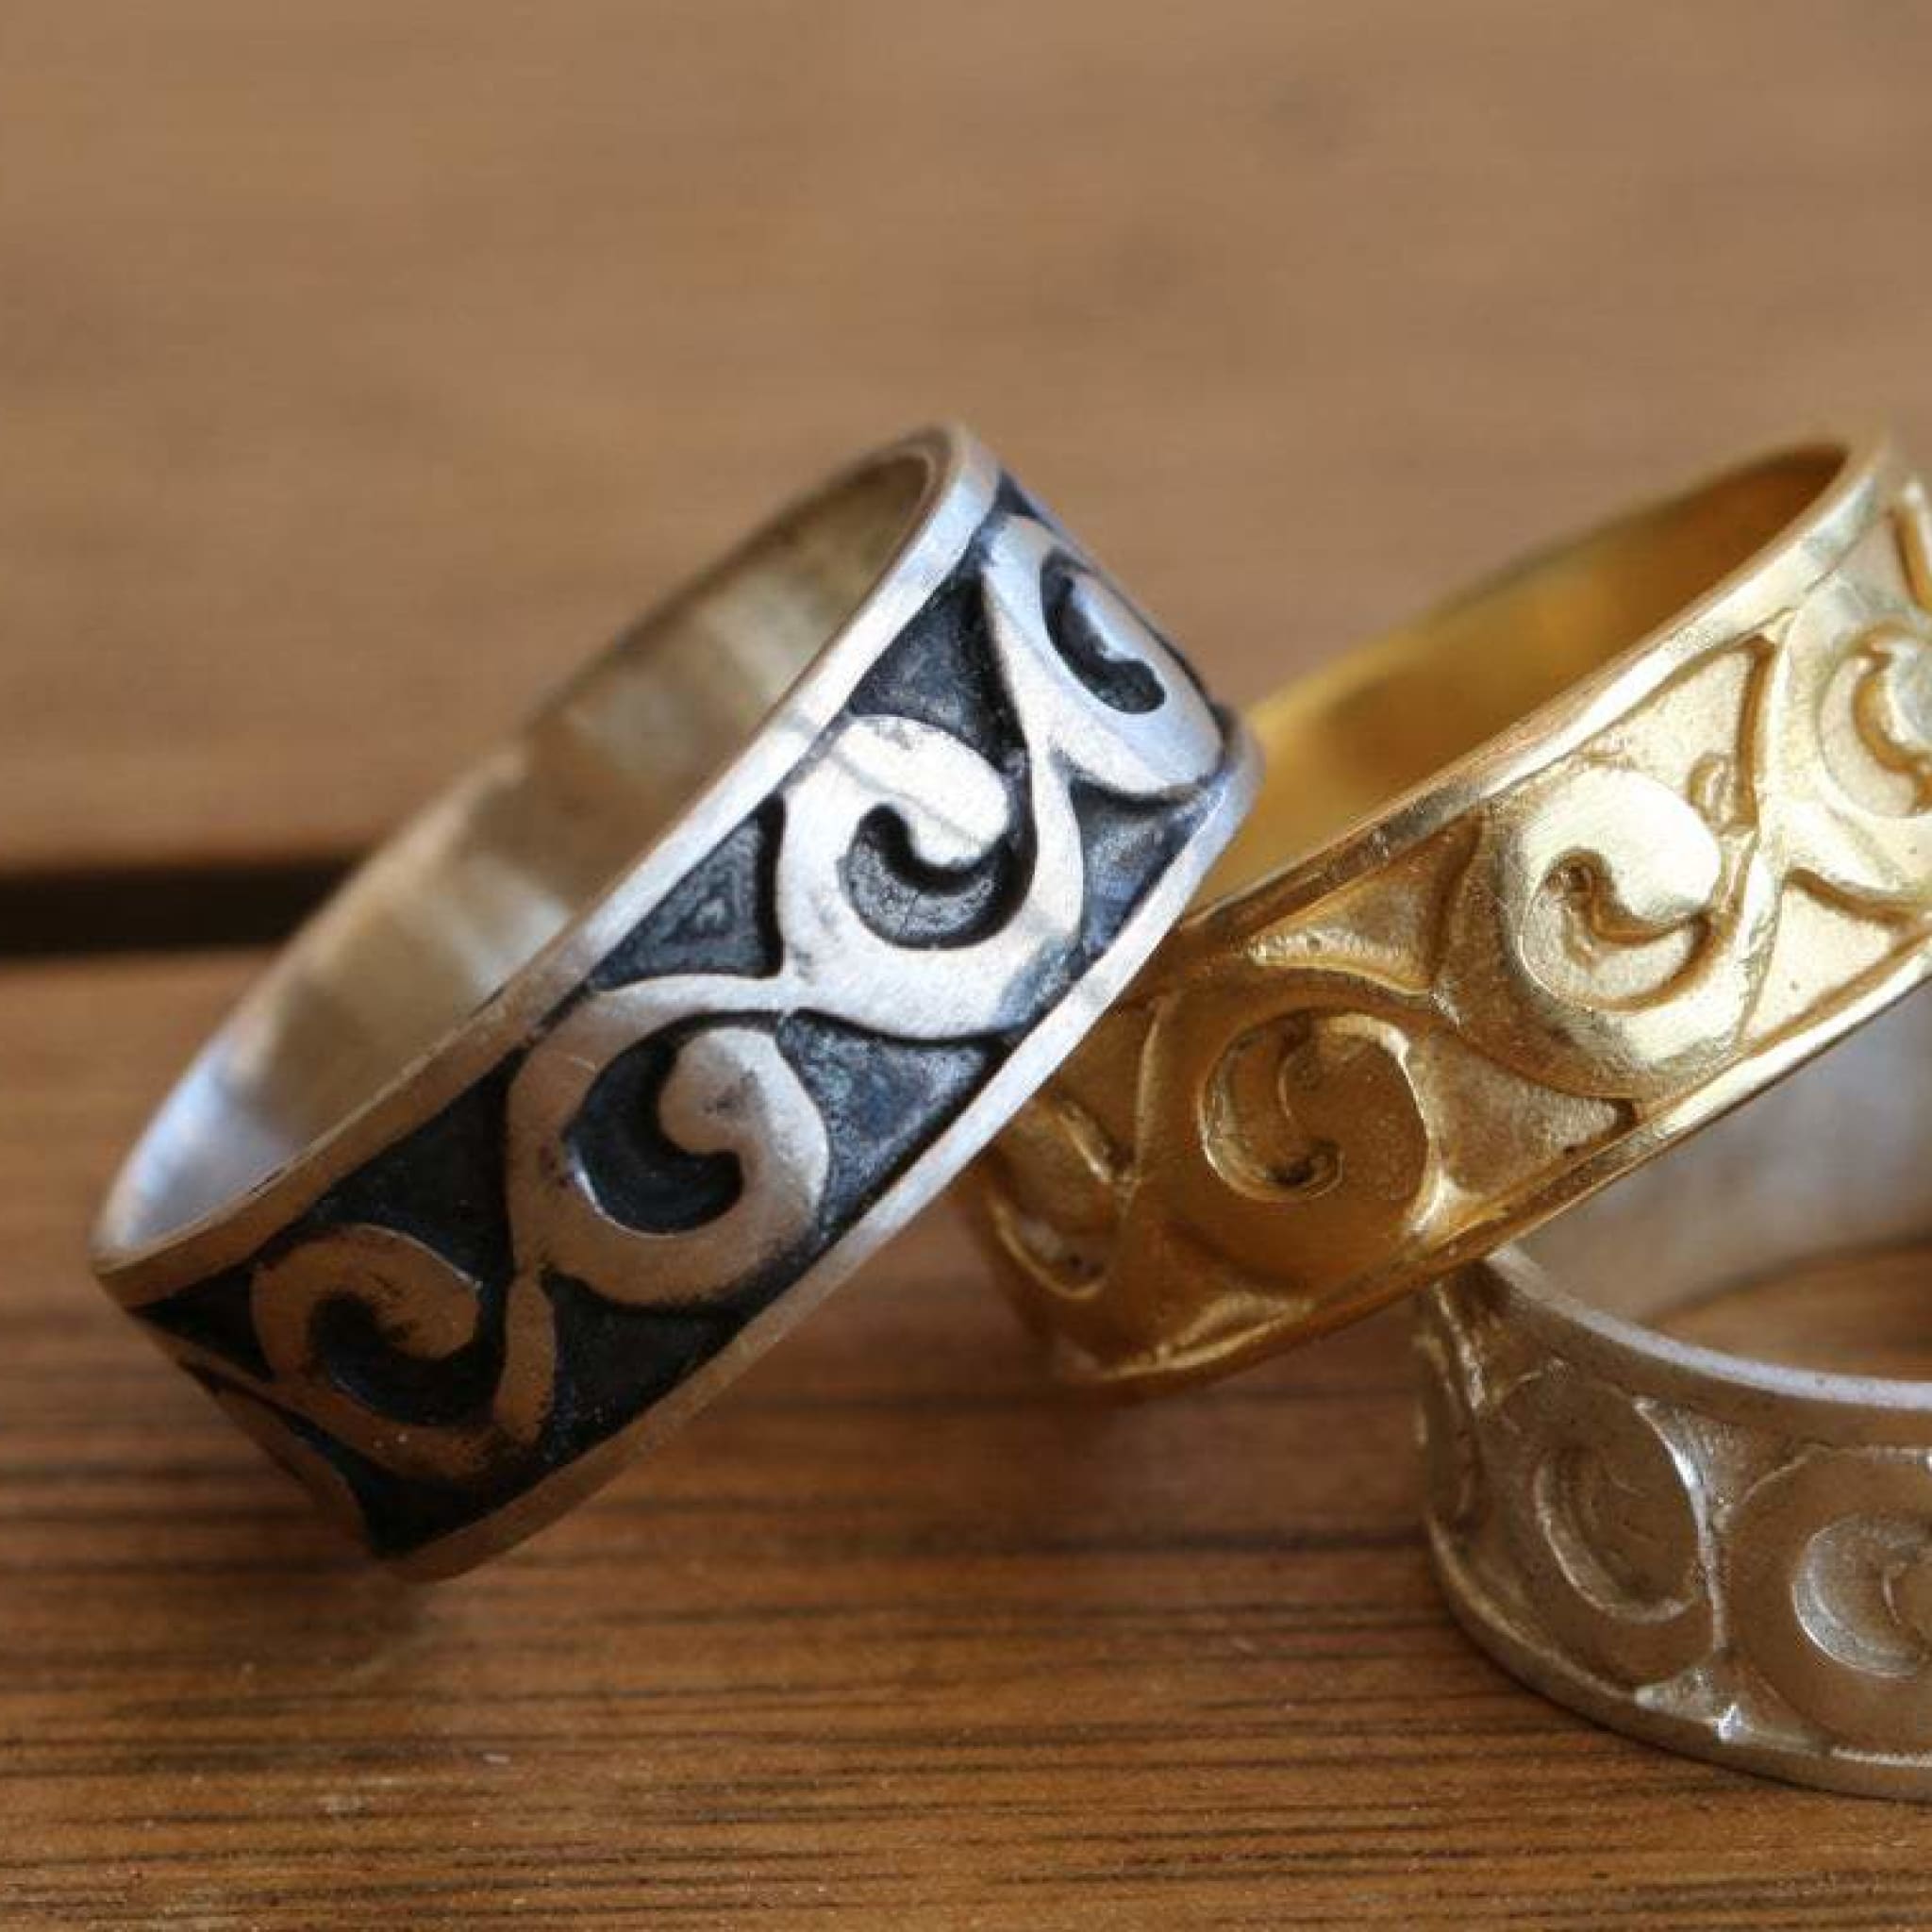 Intricate Handmade Gold Band Ring Rings